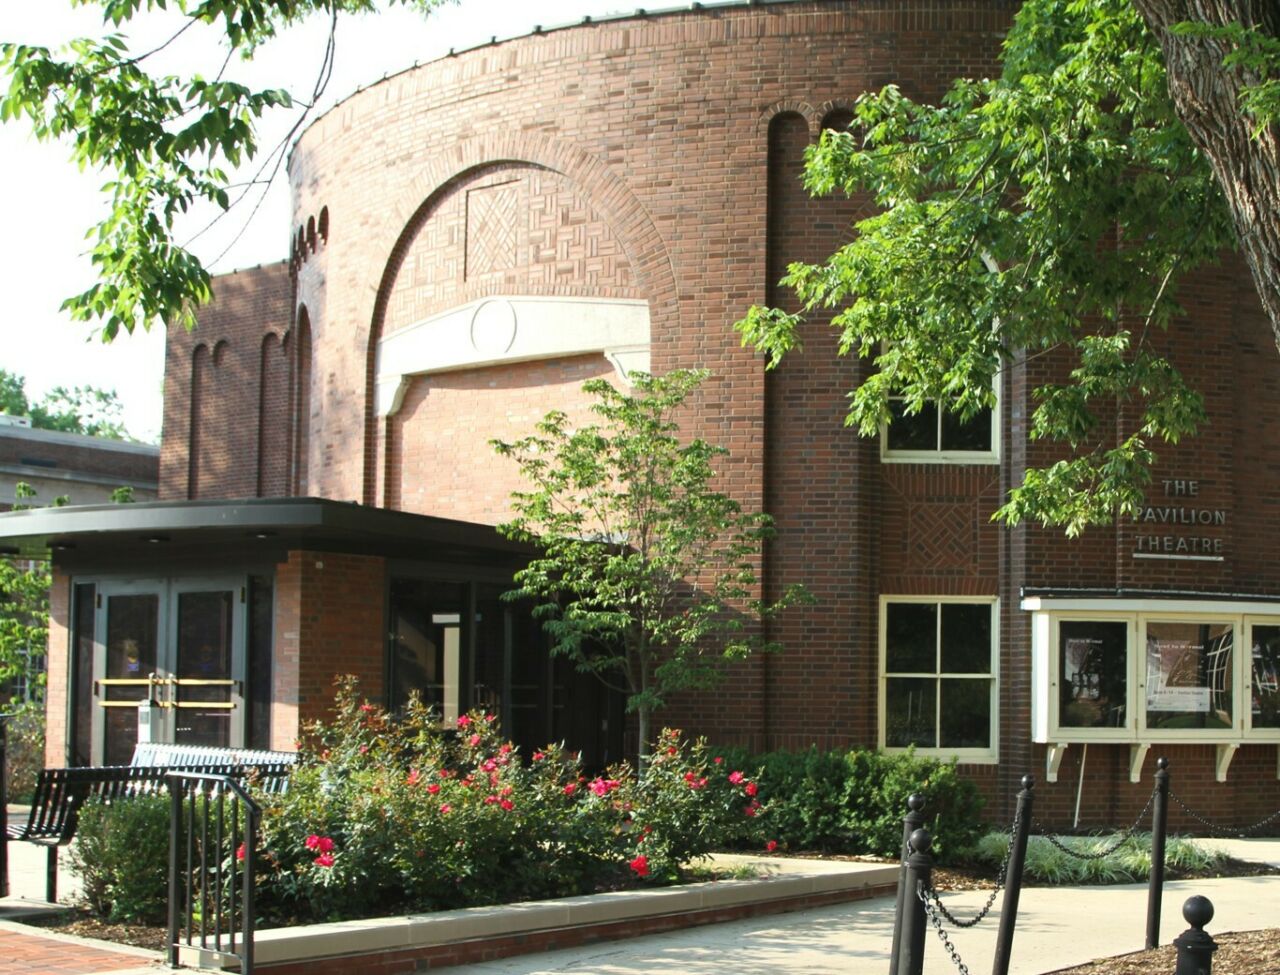 Pavilion Theatre on Penn State's University Park campus